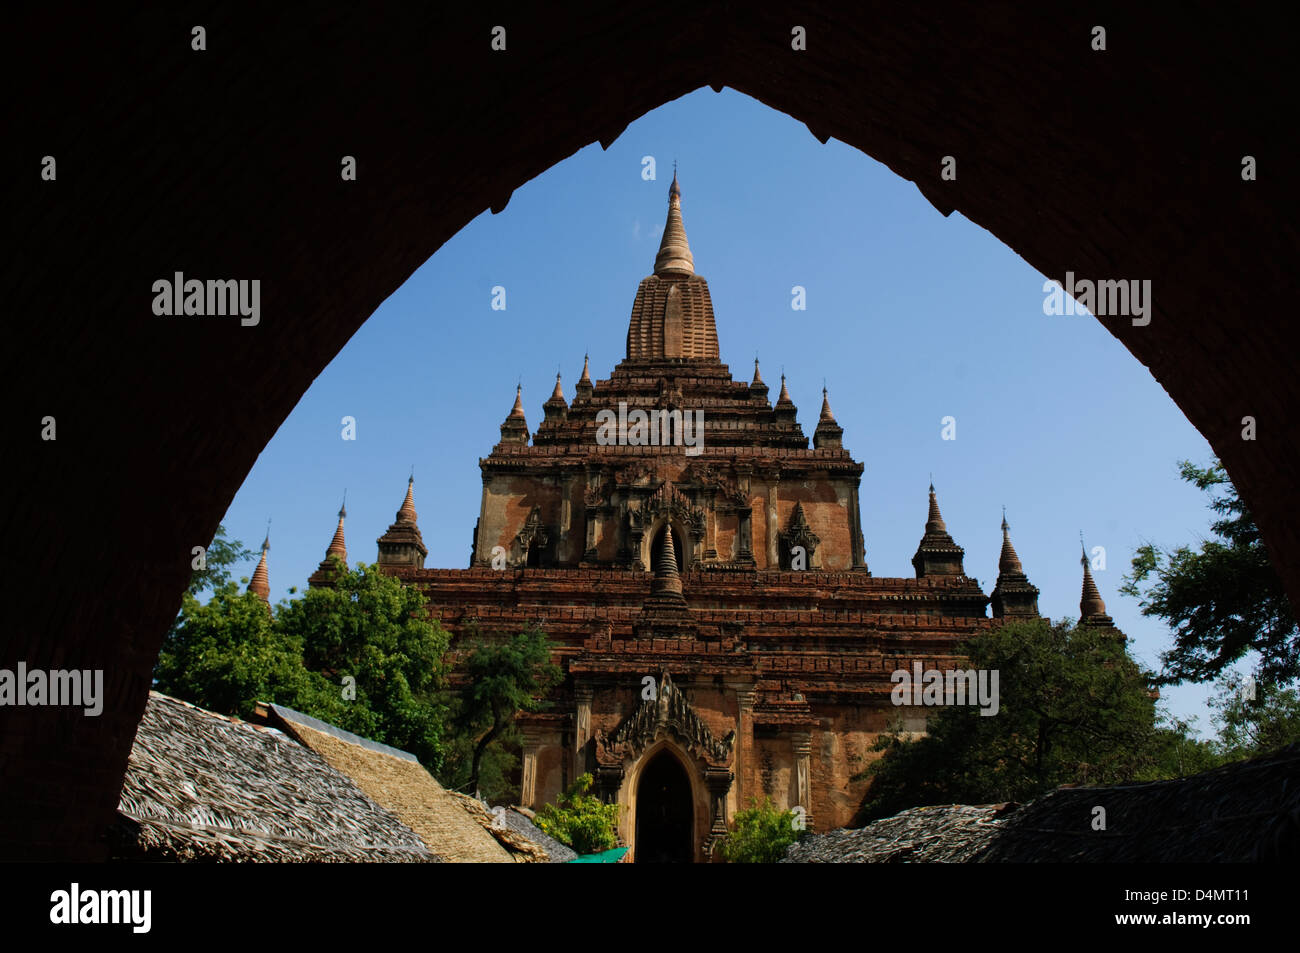 Su-la-ma-ni par le biais d'un temple pahto arch, Bagan, Myanmar (Birmanie) Banque D'Images